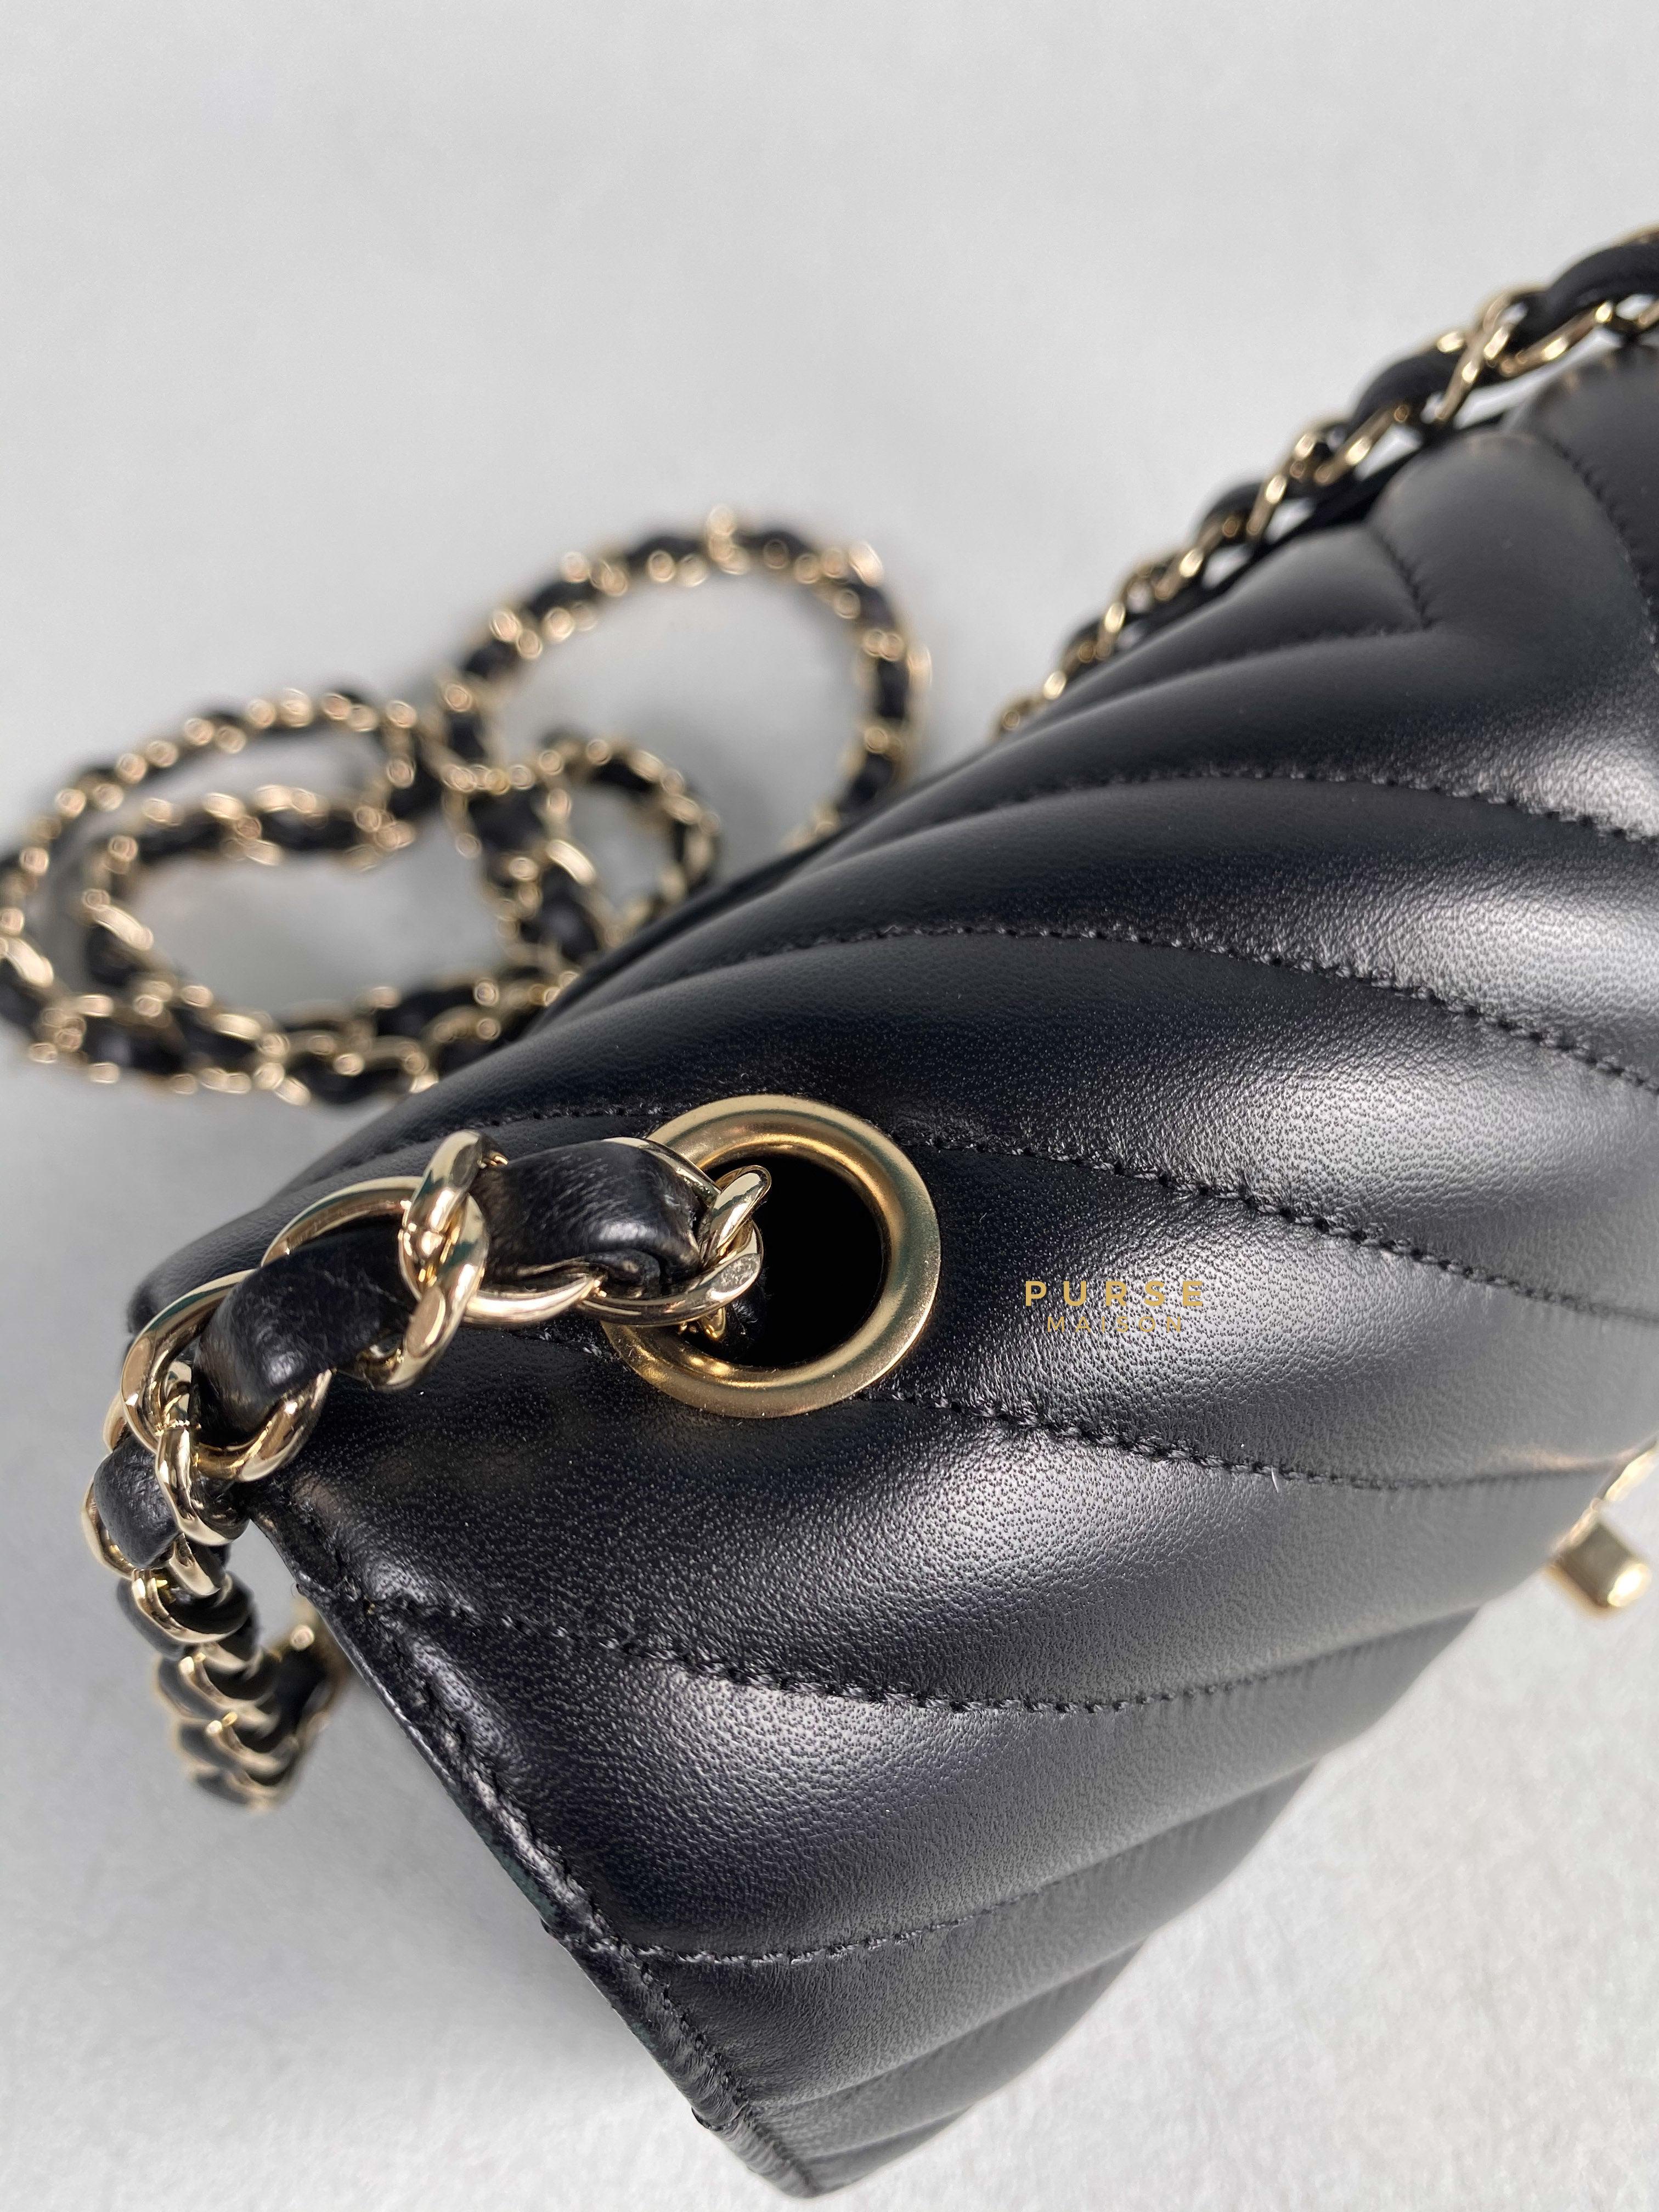 Chanel Mini Rectangle Black Chevron Lambskin and Light Gold Hardware Series 23 | Purse Maison Luxury Bags Shop